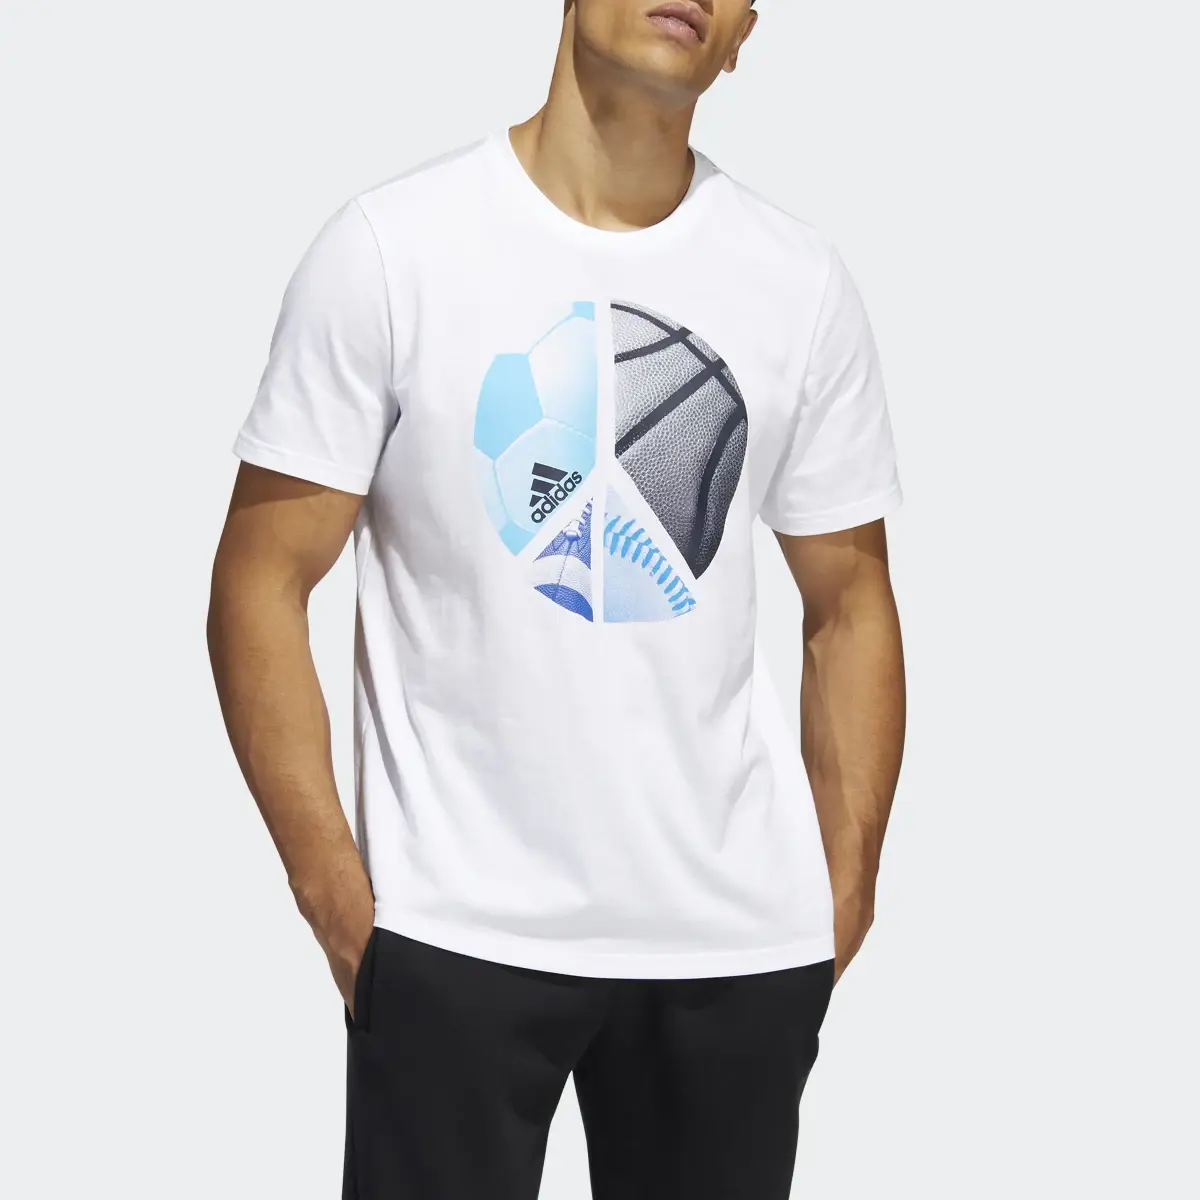 Adidas T-shirt Multiplicity. 1